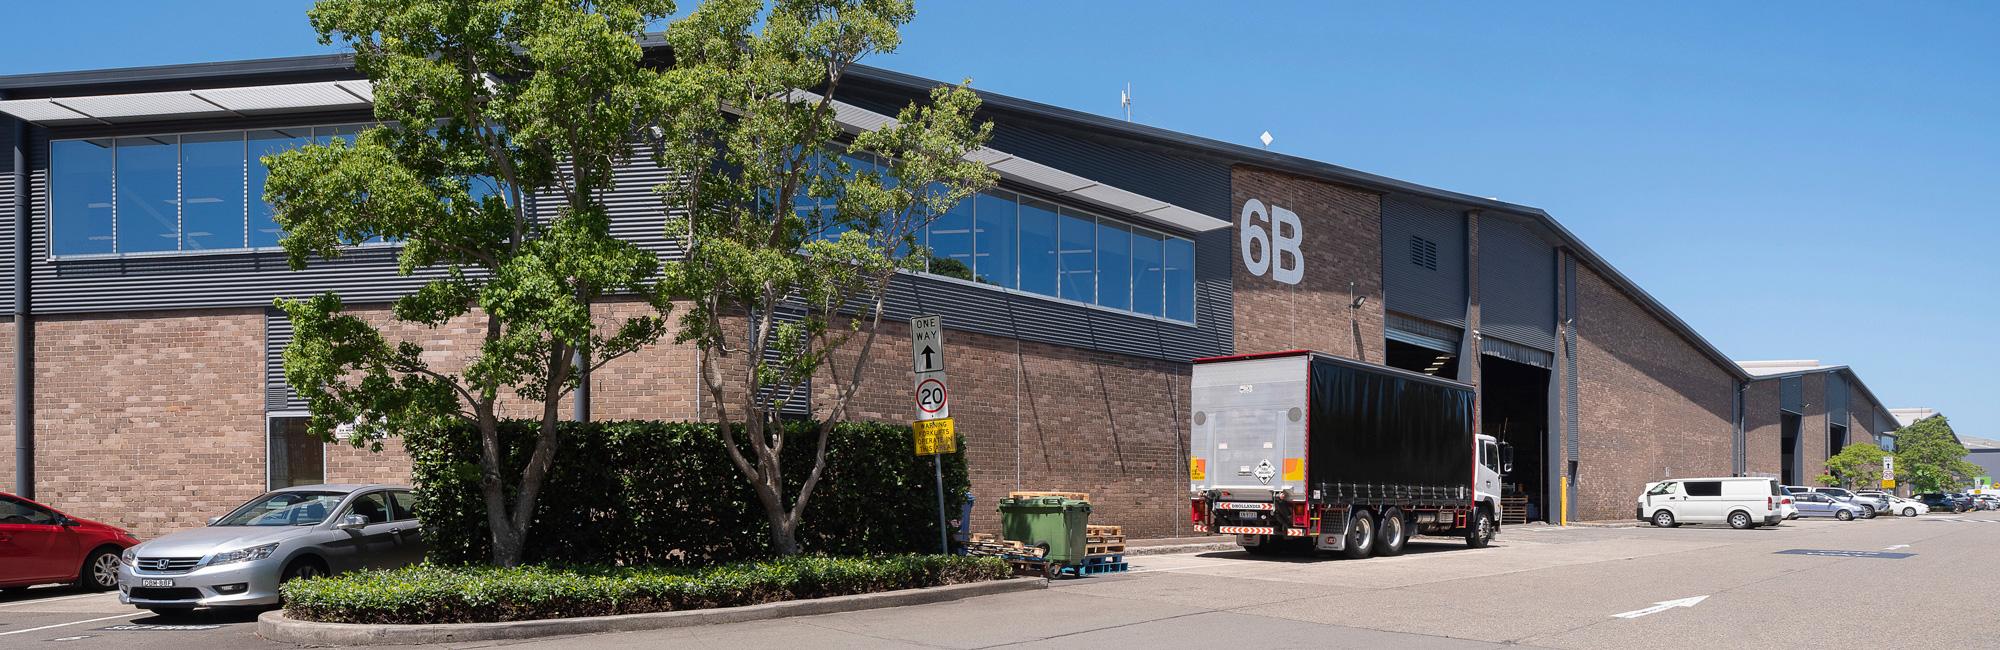 Unit 6B warehouse exterior